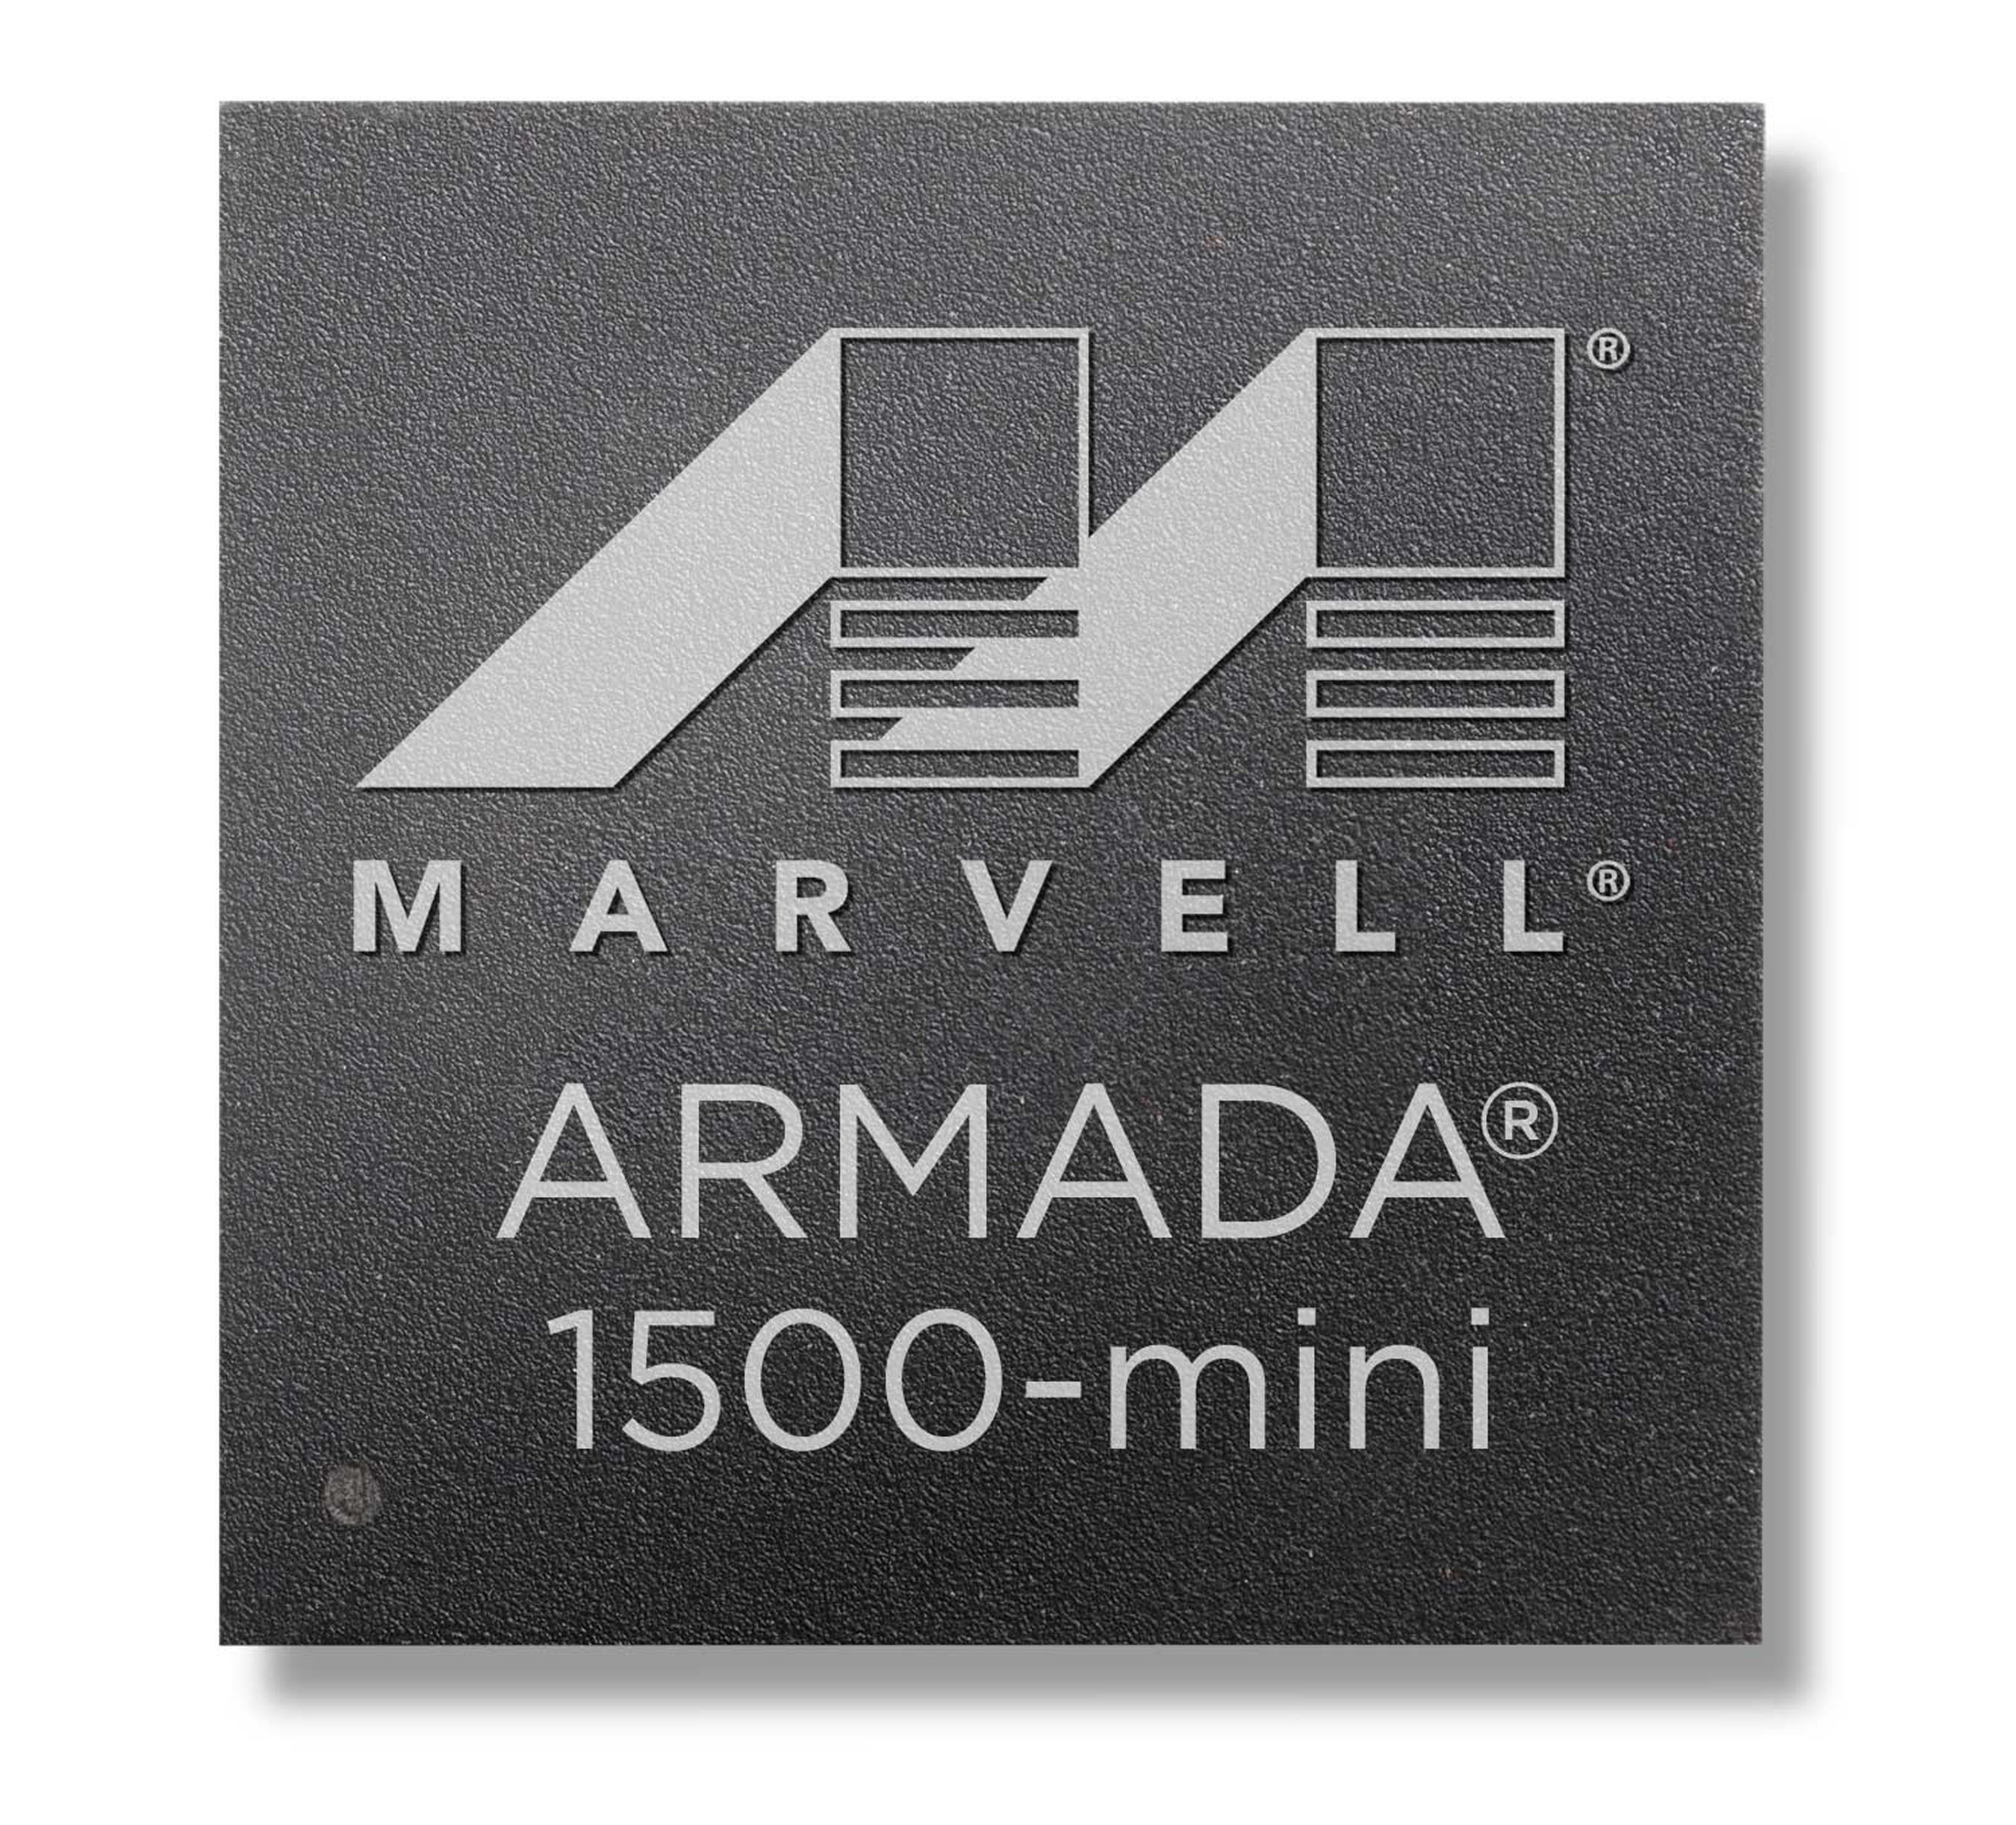 Marvell Unveils Game-Changing ARMADA 1500-mini Solution for Chromecast. (PRNewsFoto/Marvell) (PRNewsFoto/)